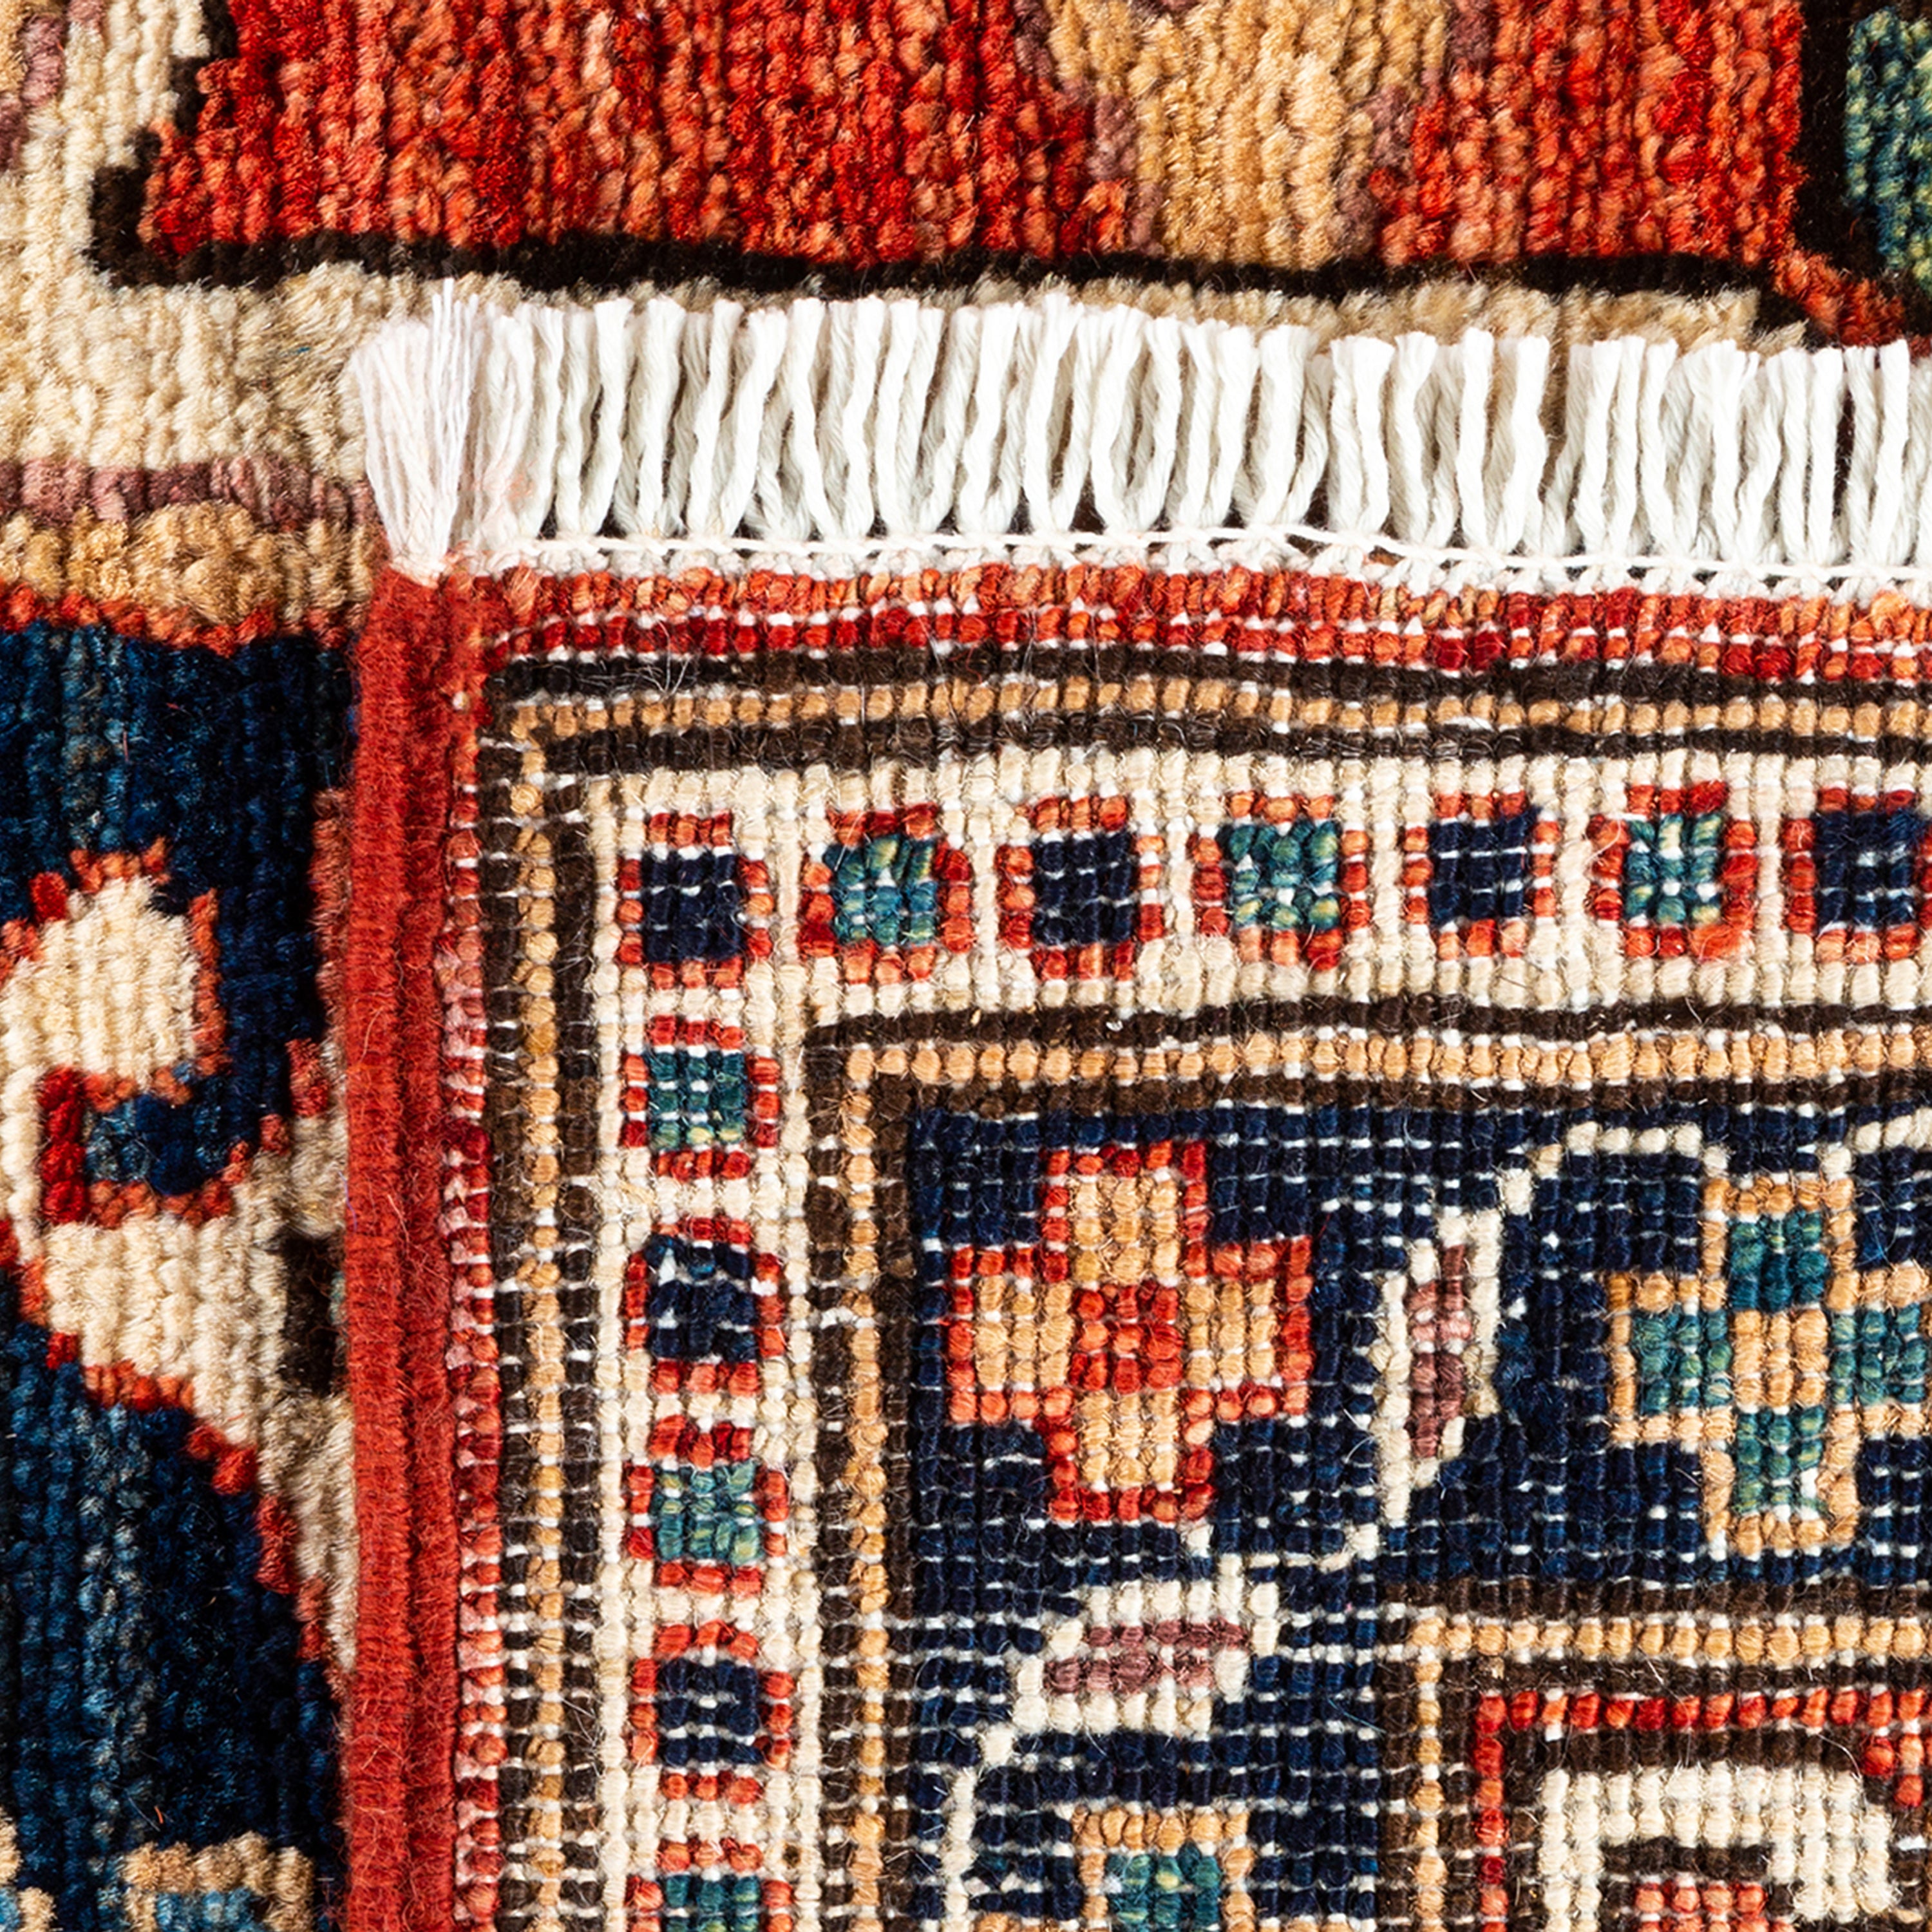 Traditional Serapi Wool Rug - 6' 3" x 8' 9"